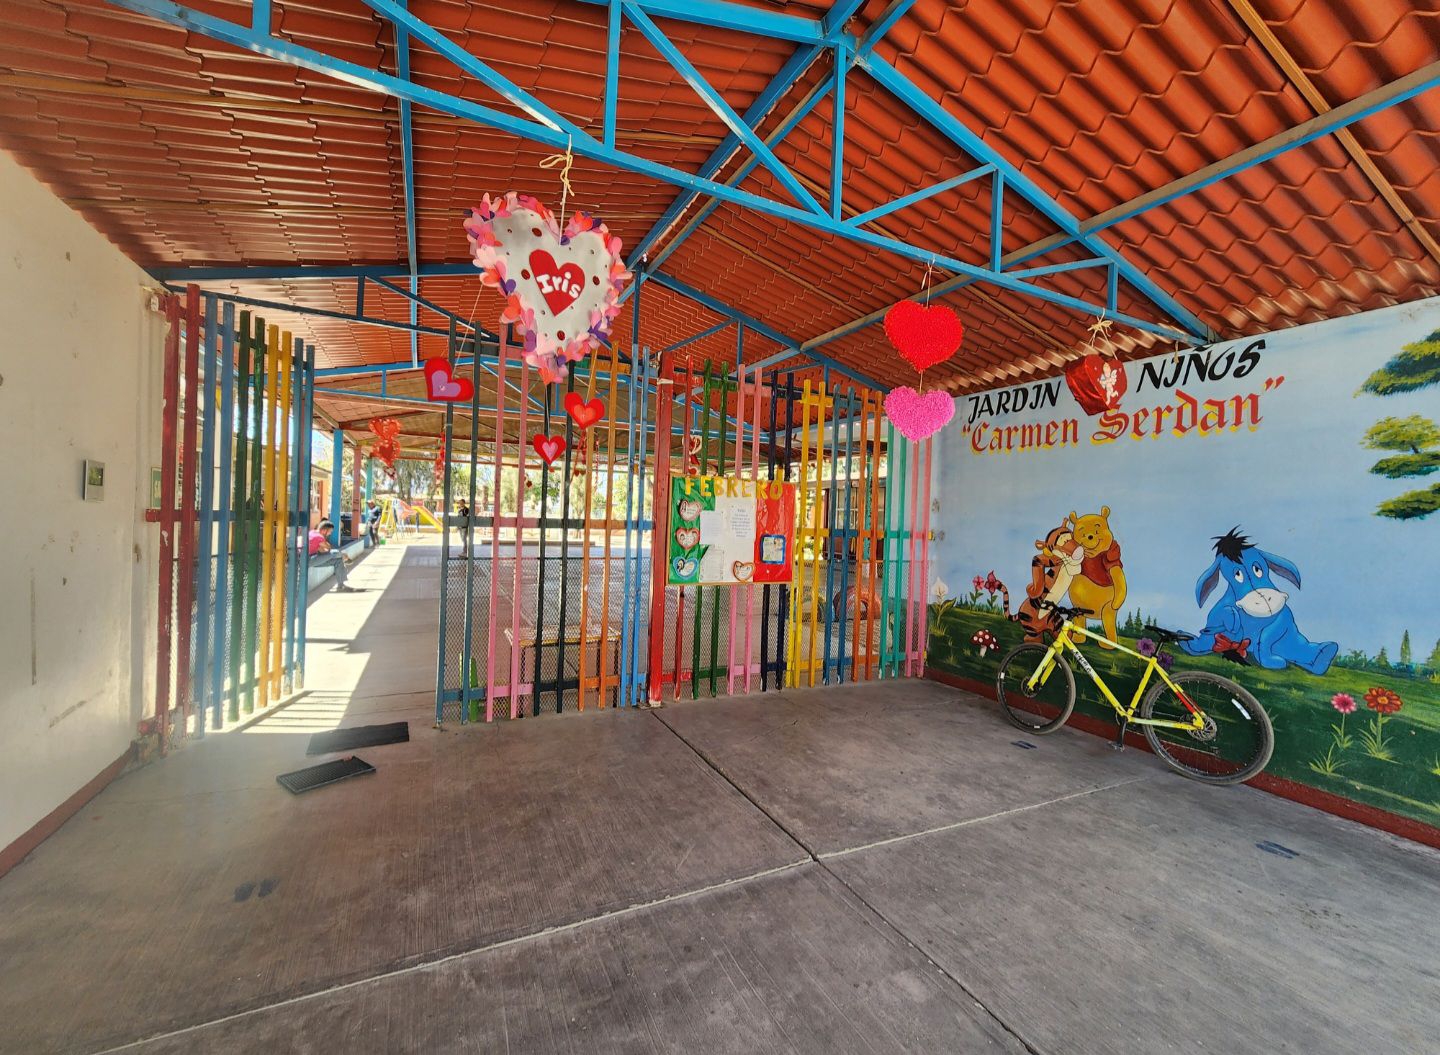 Entrance to a preschool in Mexico